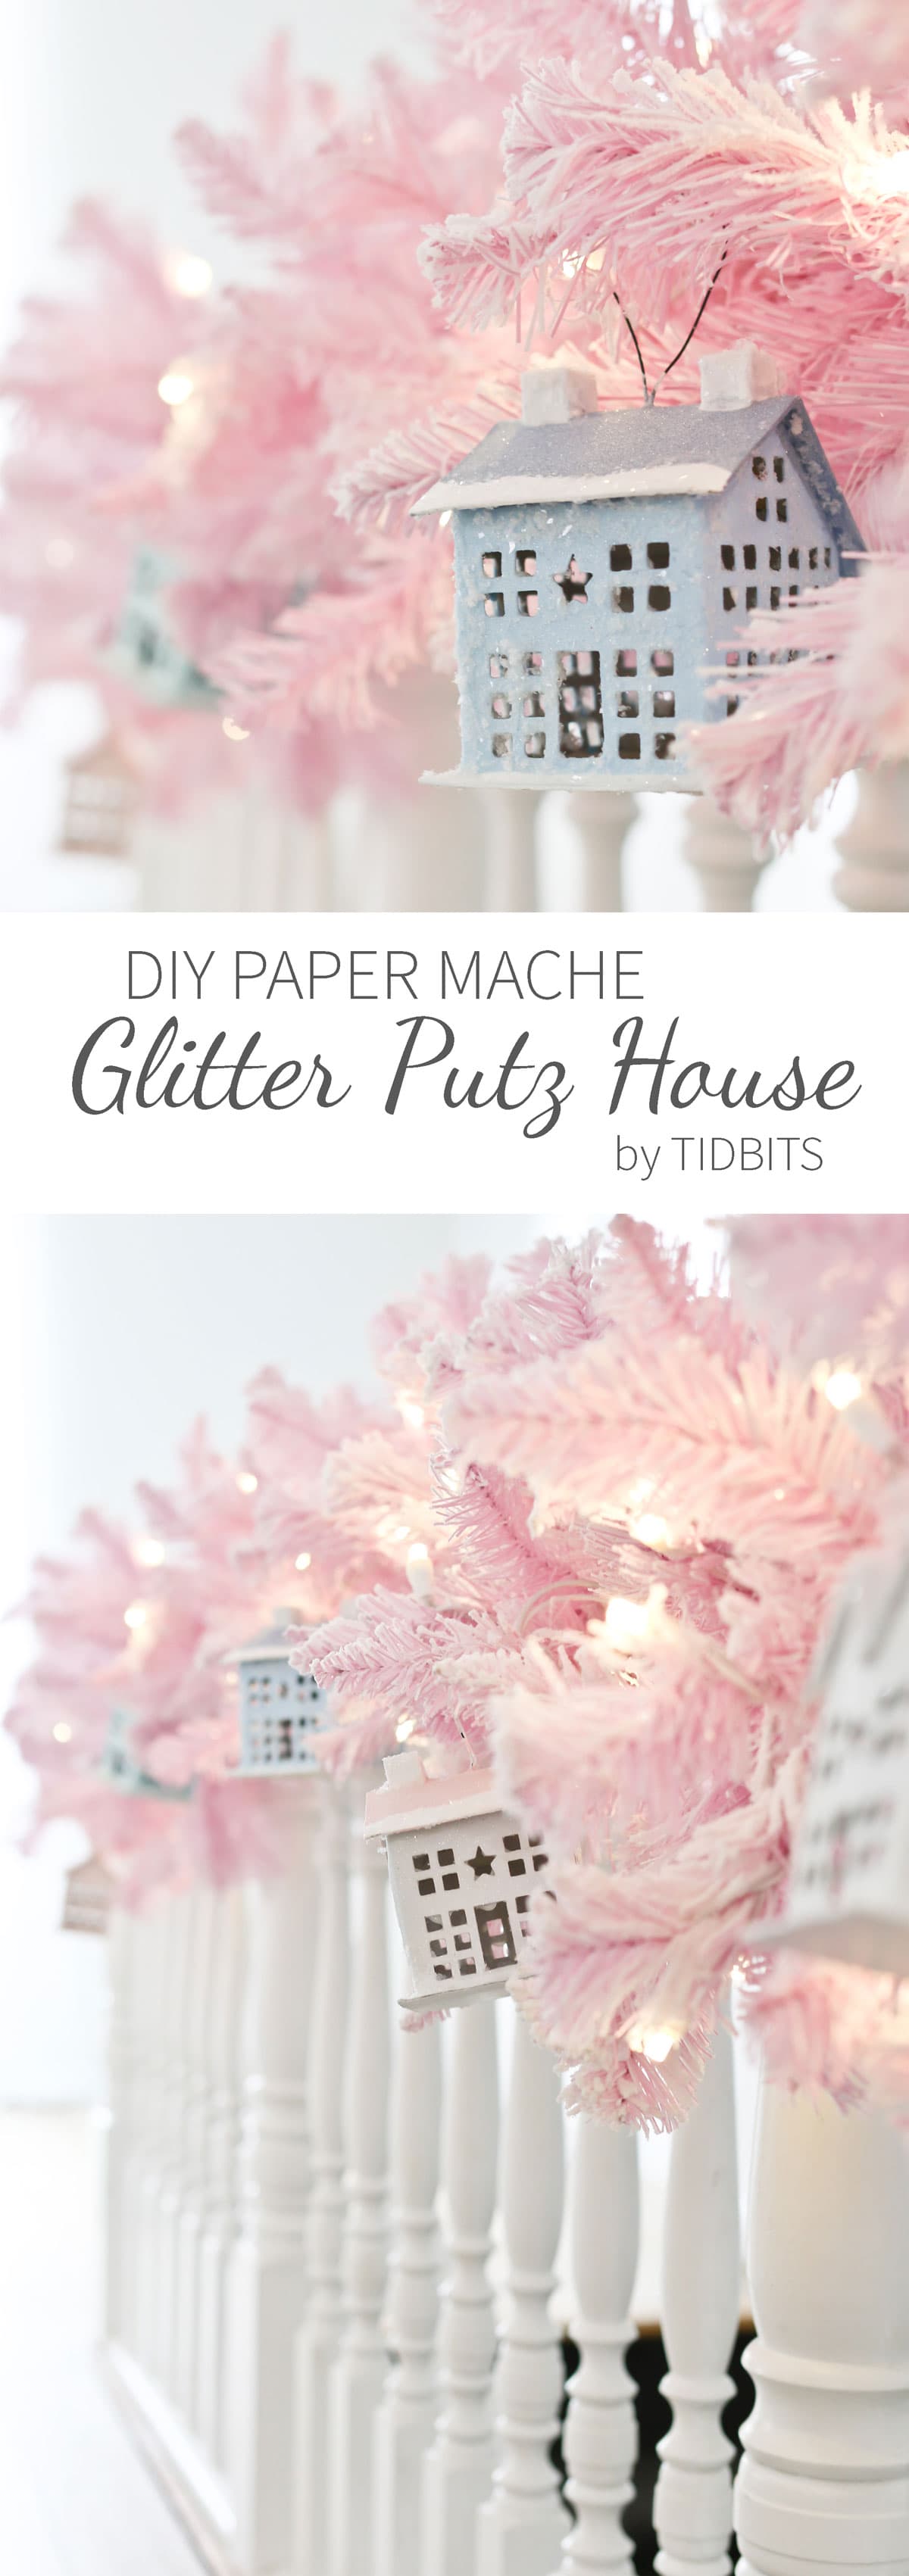 DIY Paper Mache Glitter Putz House or Village, by TIDBITS.